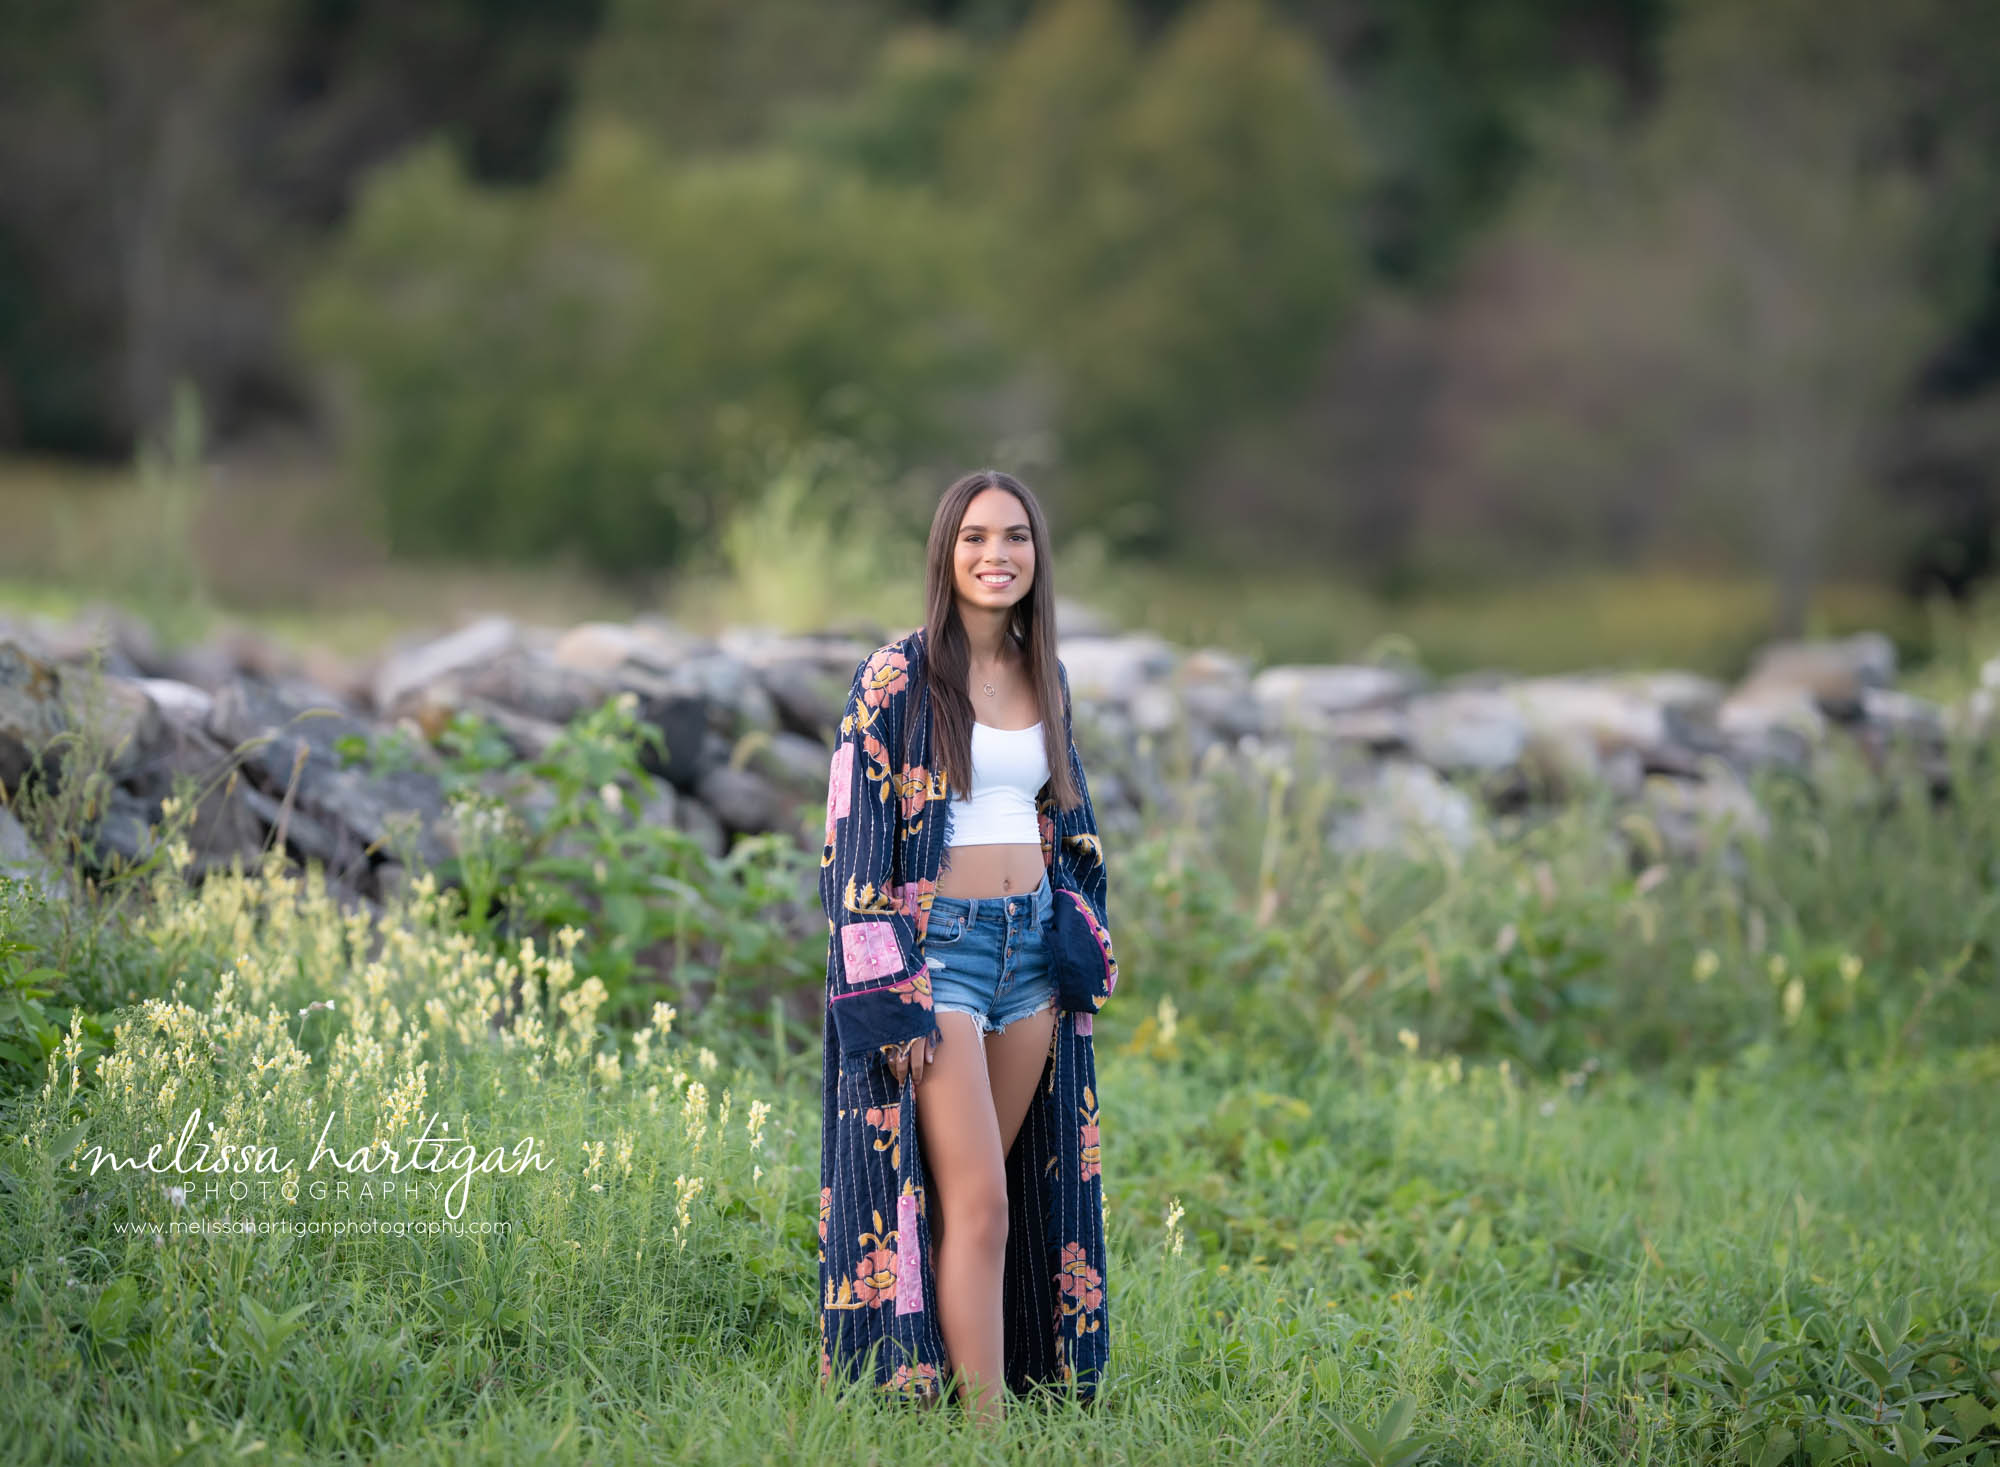 teenage girl standing in field smiling happy